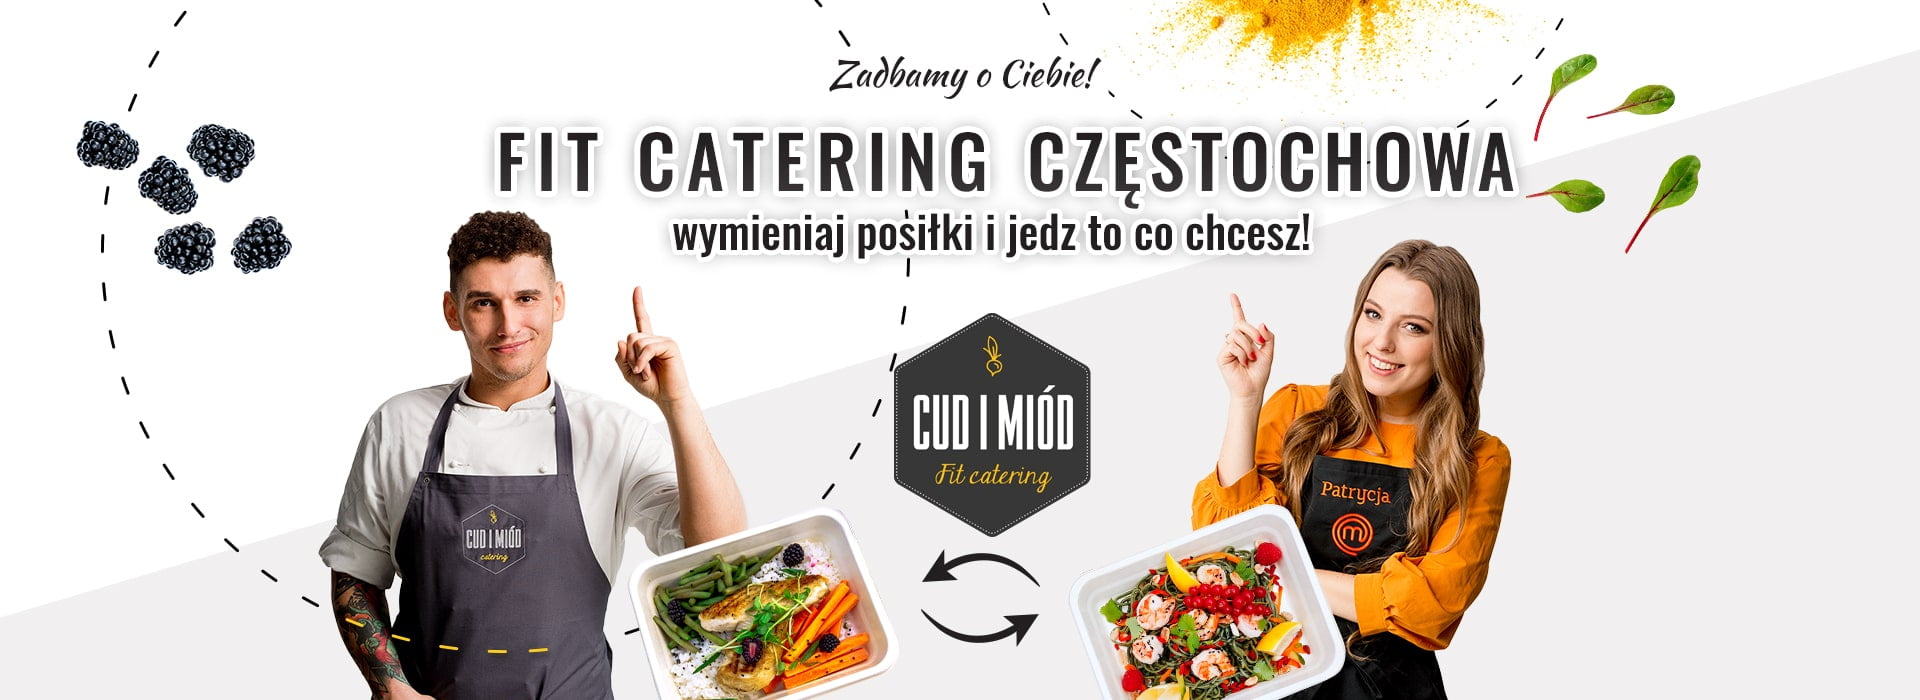 Catering-czestochowa